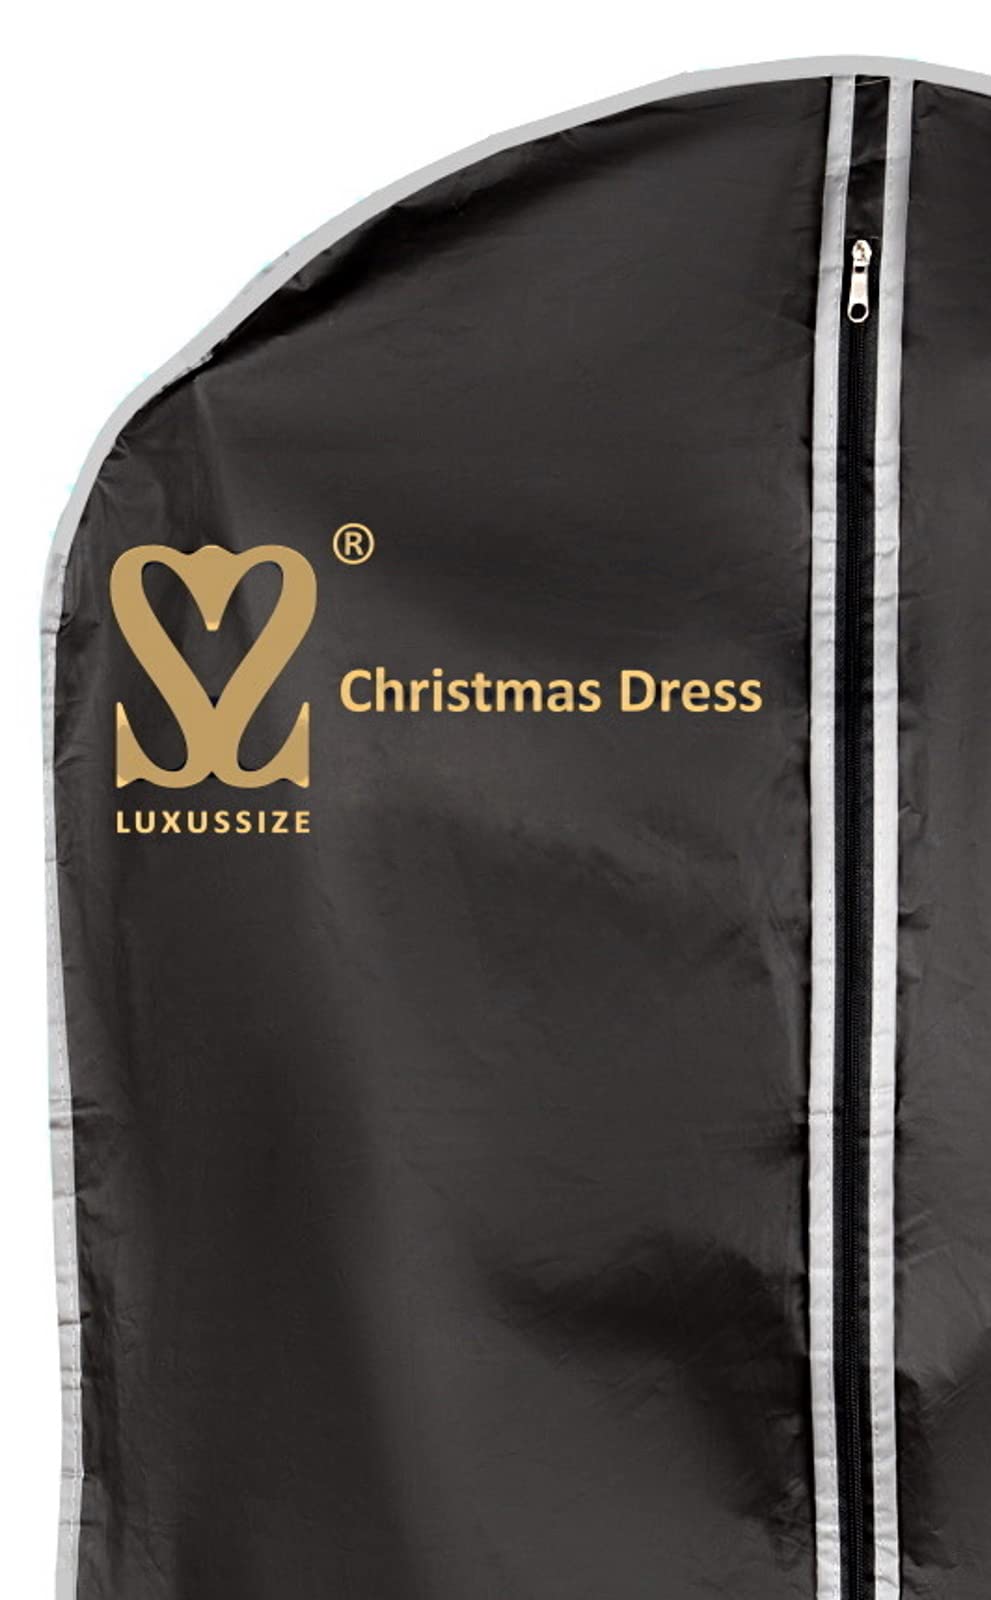 Luxussize - Kleidersack, Kleiderhülle -2 Stck. - Luxus- & CHRISTMAS DRESS - 100 x 58 cm